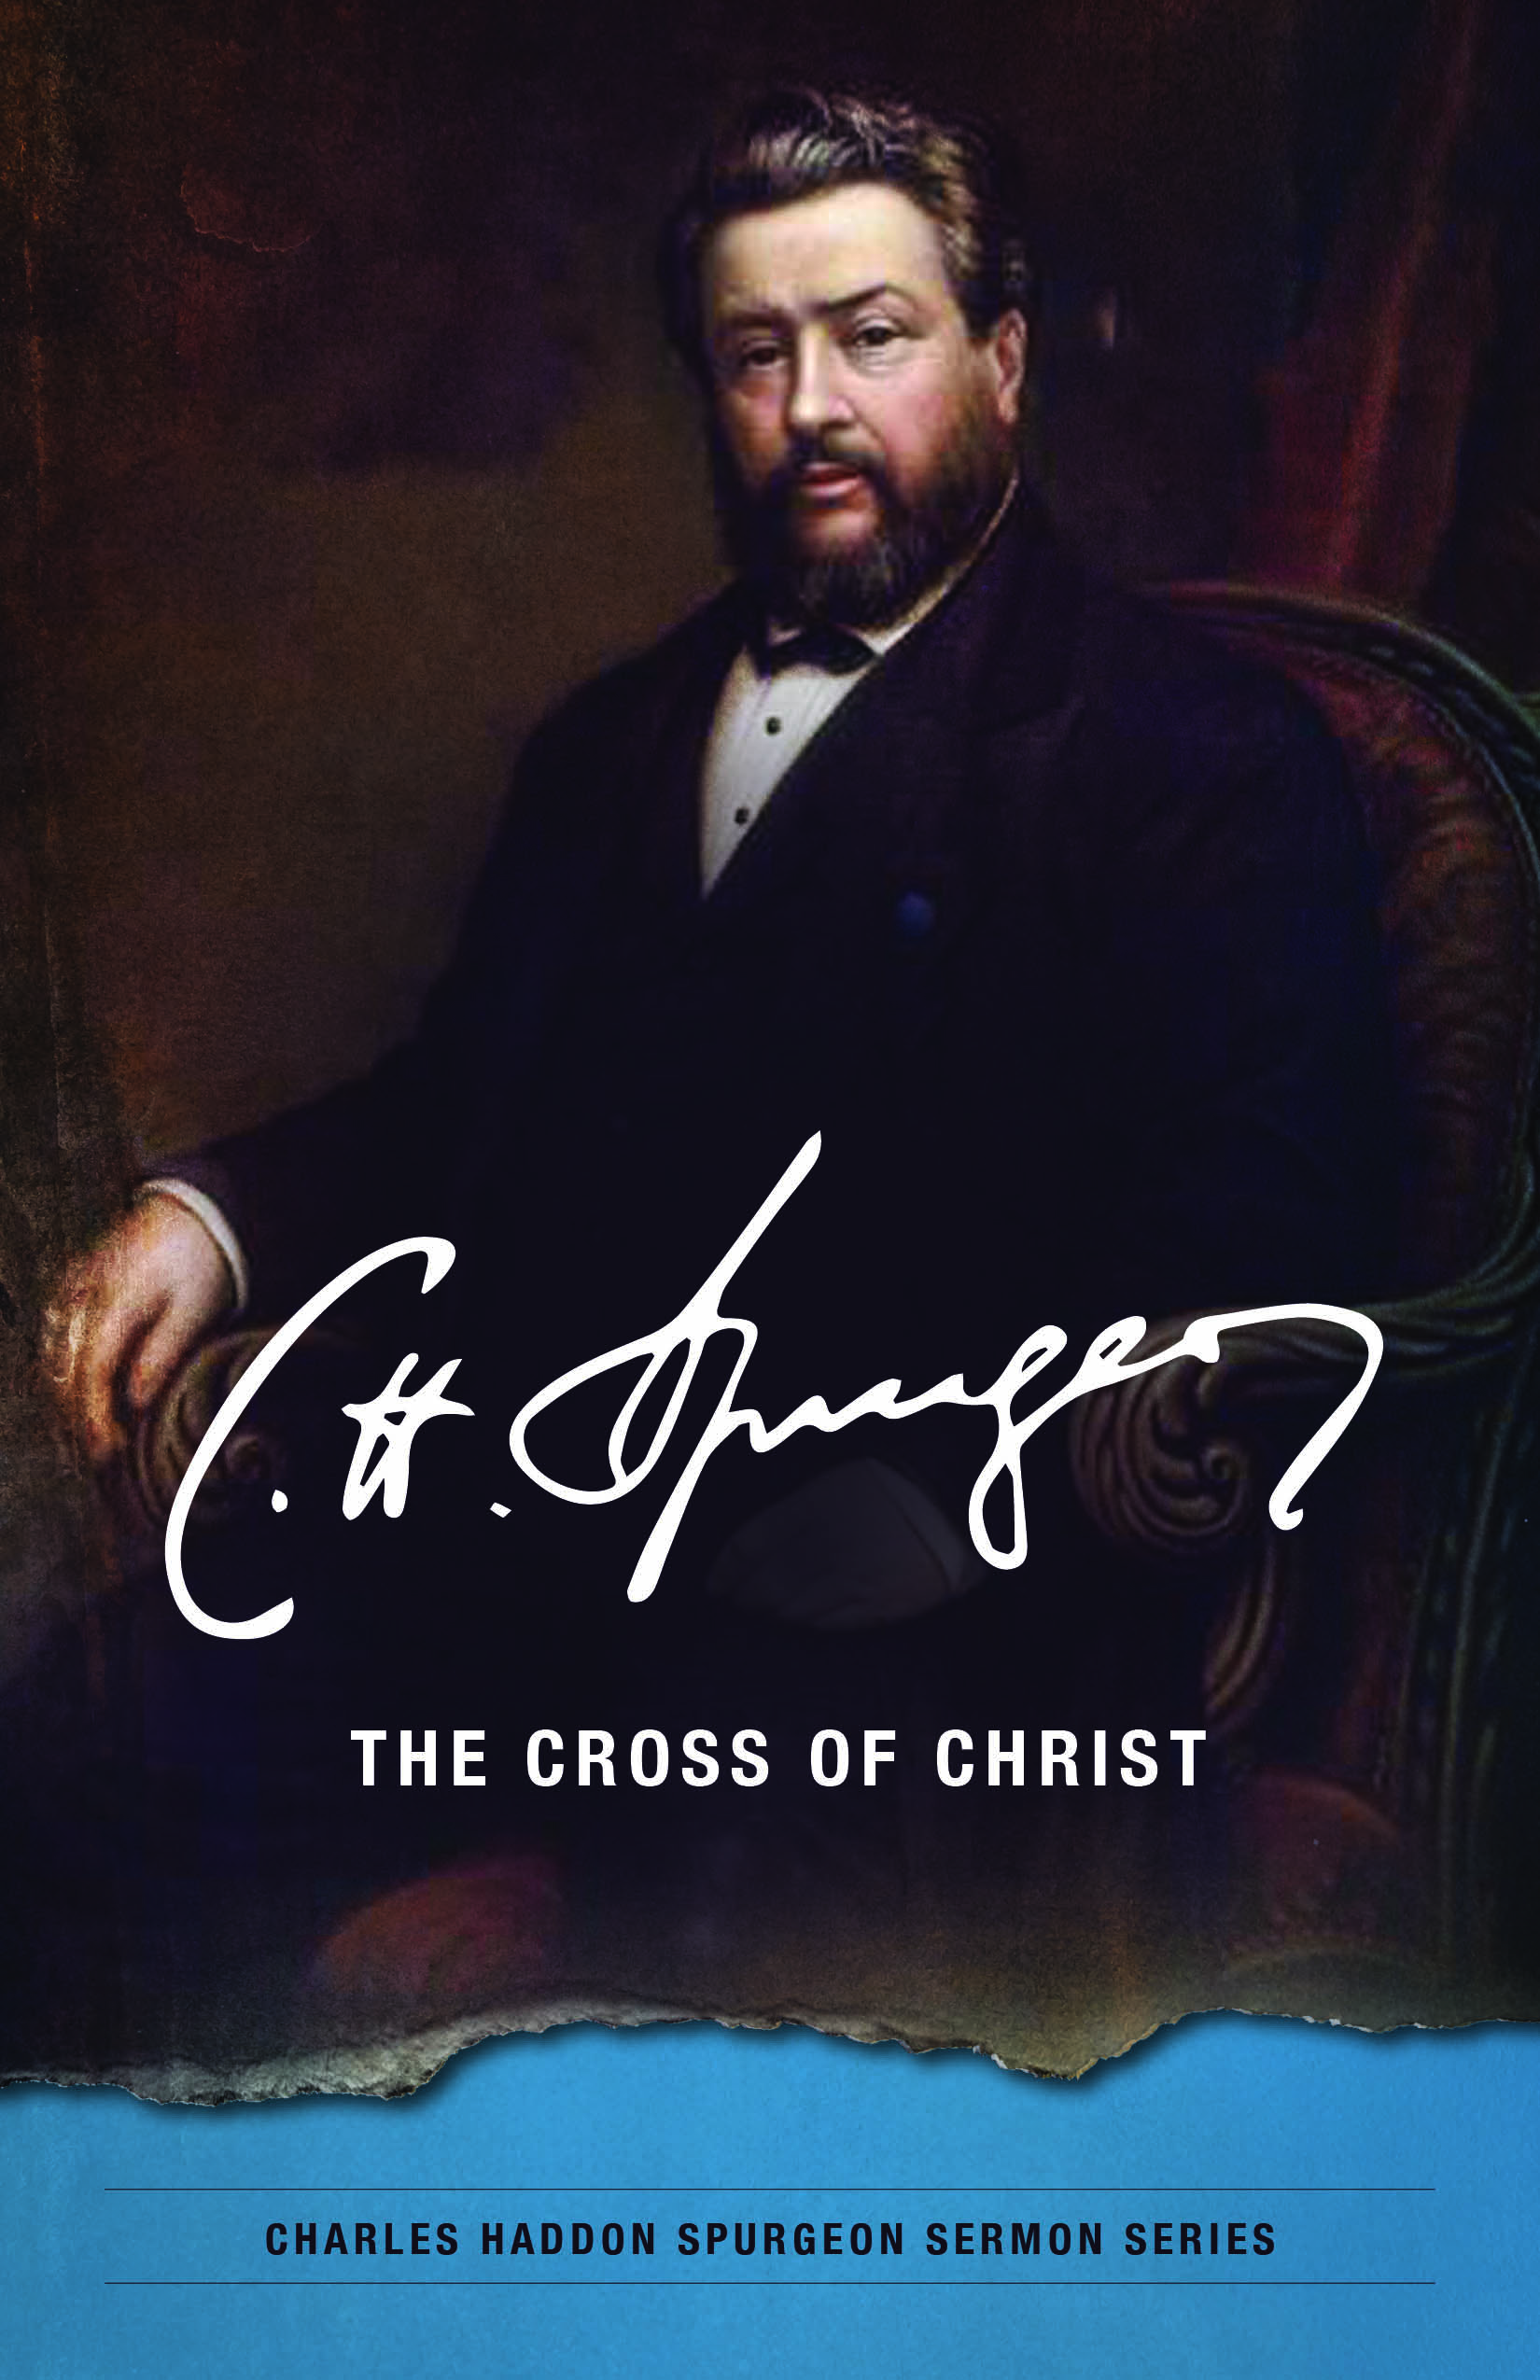 Spurgeon's Sermons on the Cross of Christ